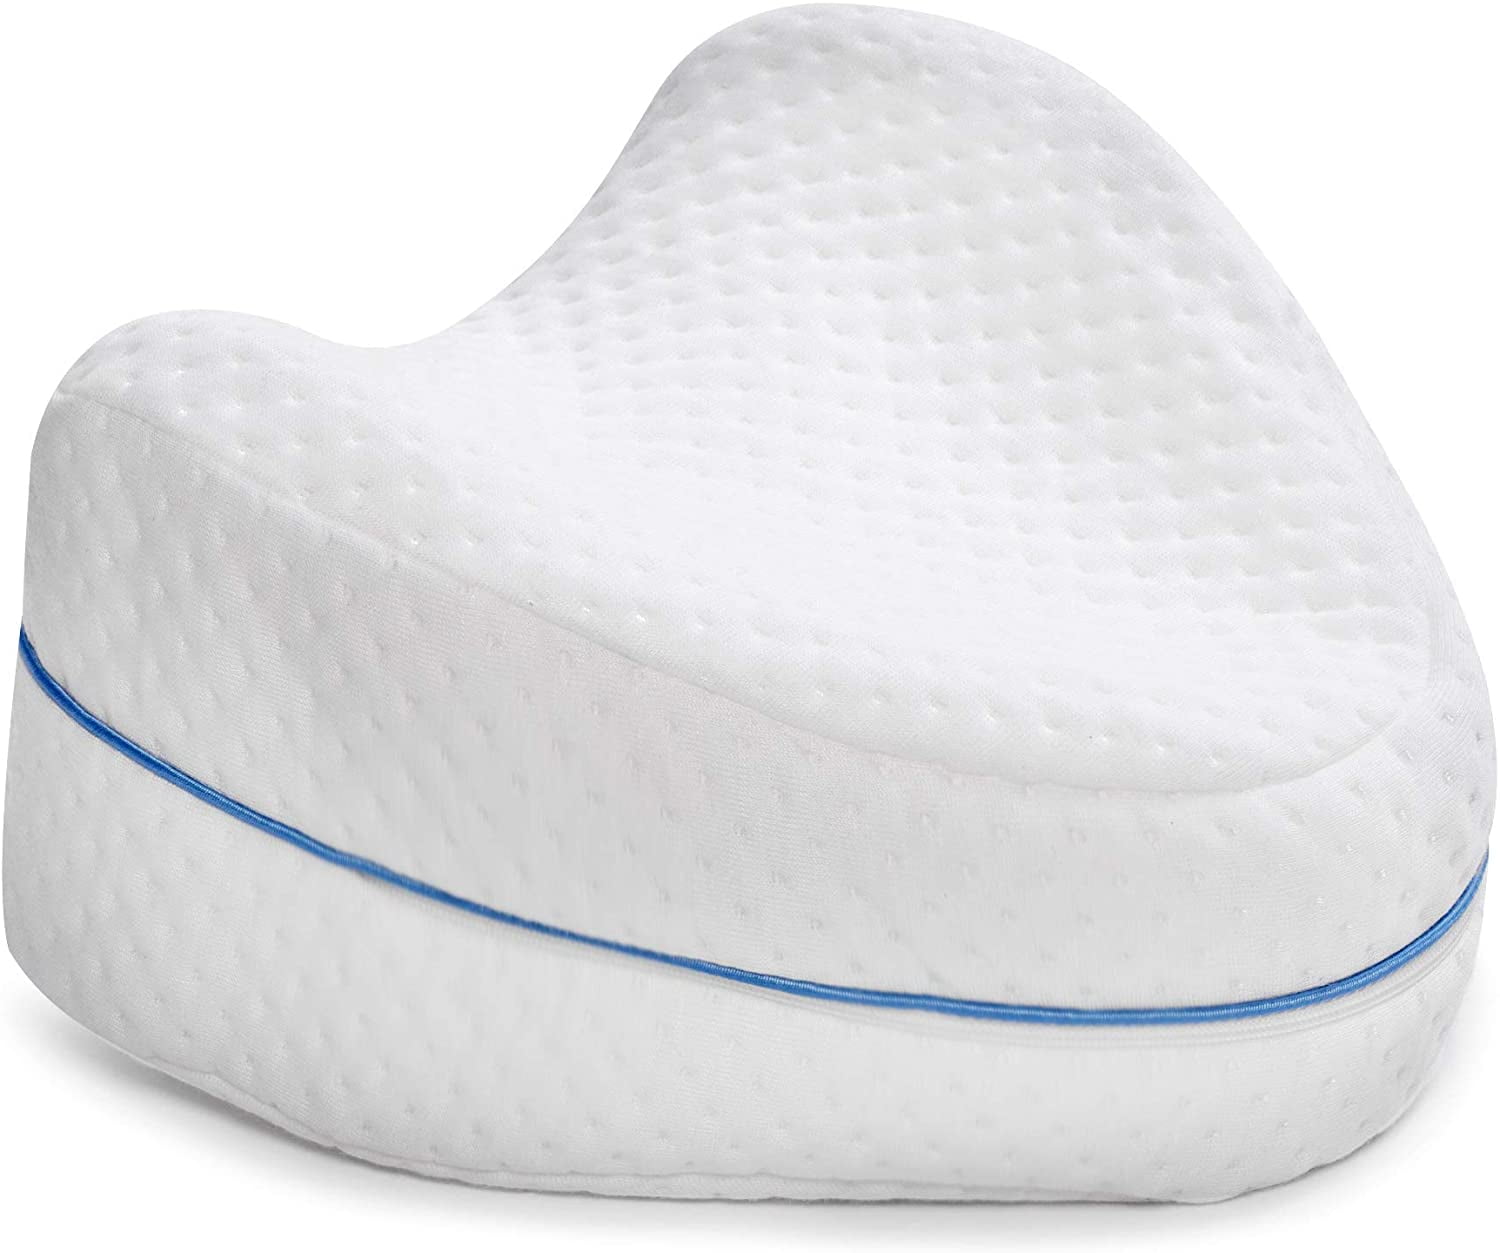 Memory Foam Knee Pillow Wedge Contour Leg Cushion Orthopedic Sciatica Side Sleep 